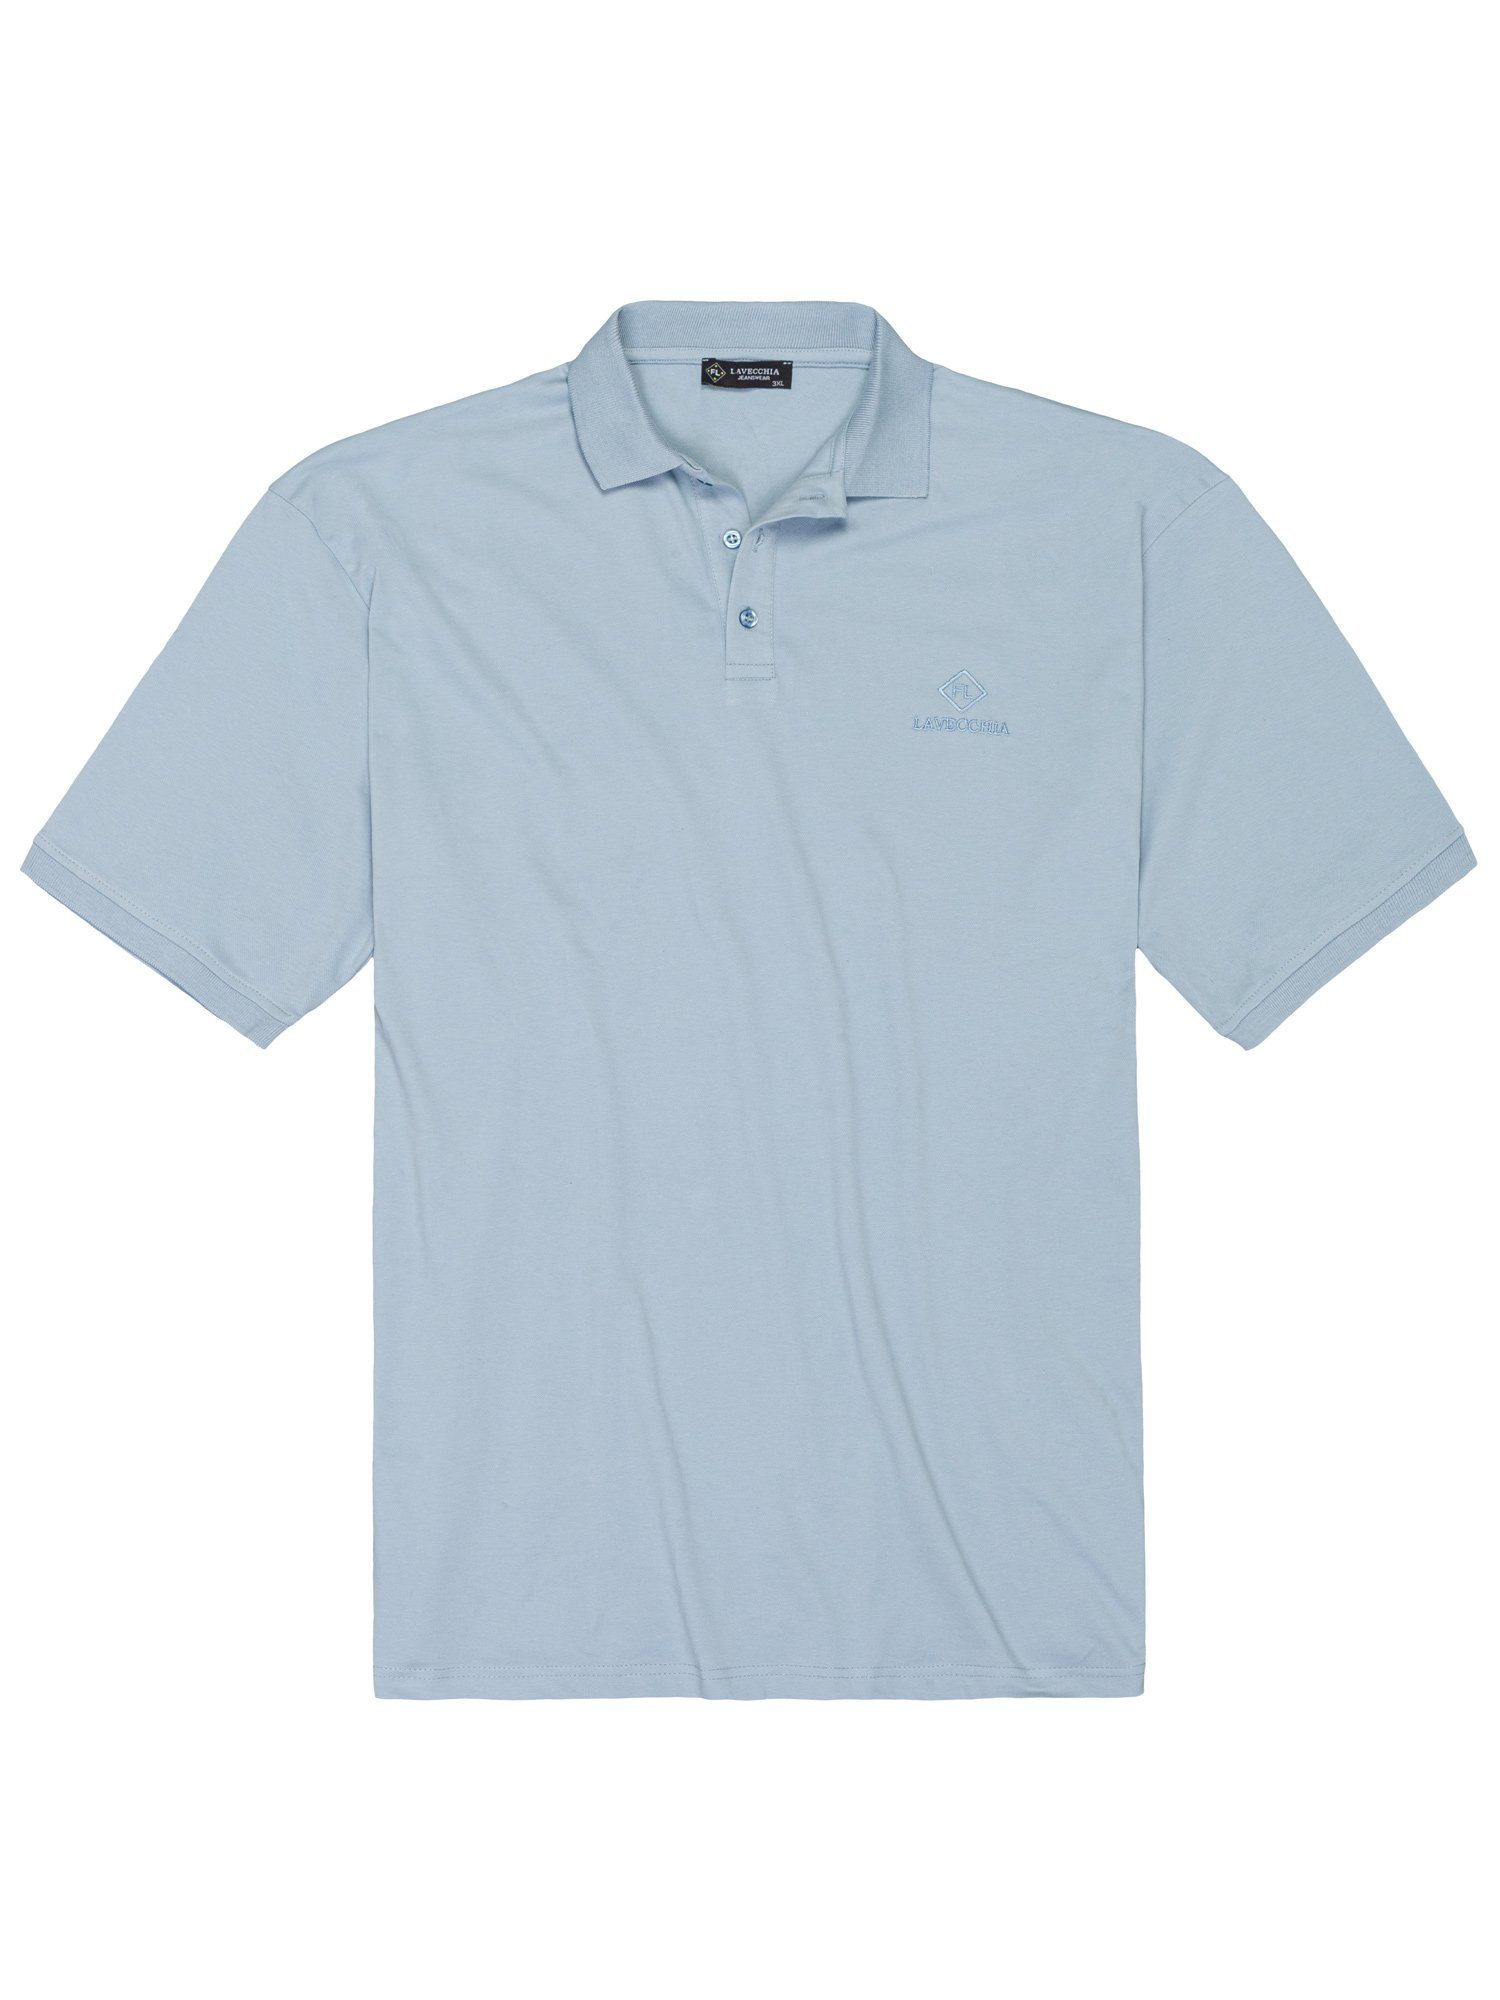 Polo Shirt Lavecchia hellblau Poloshirt Herren Übergrößen LV-1000